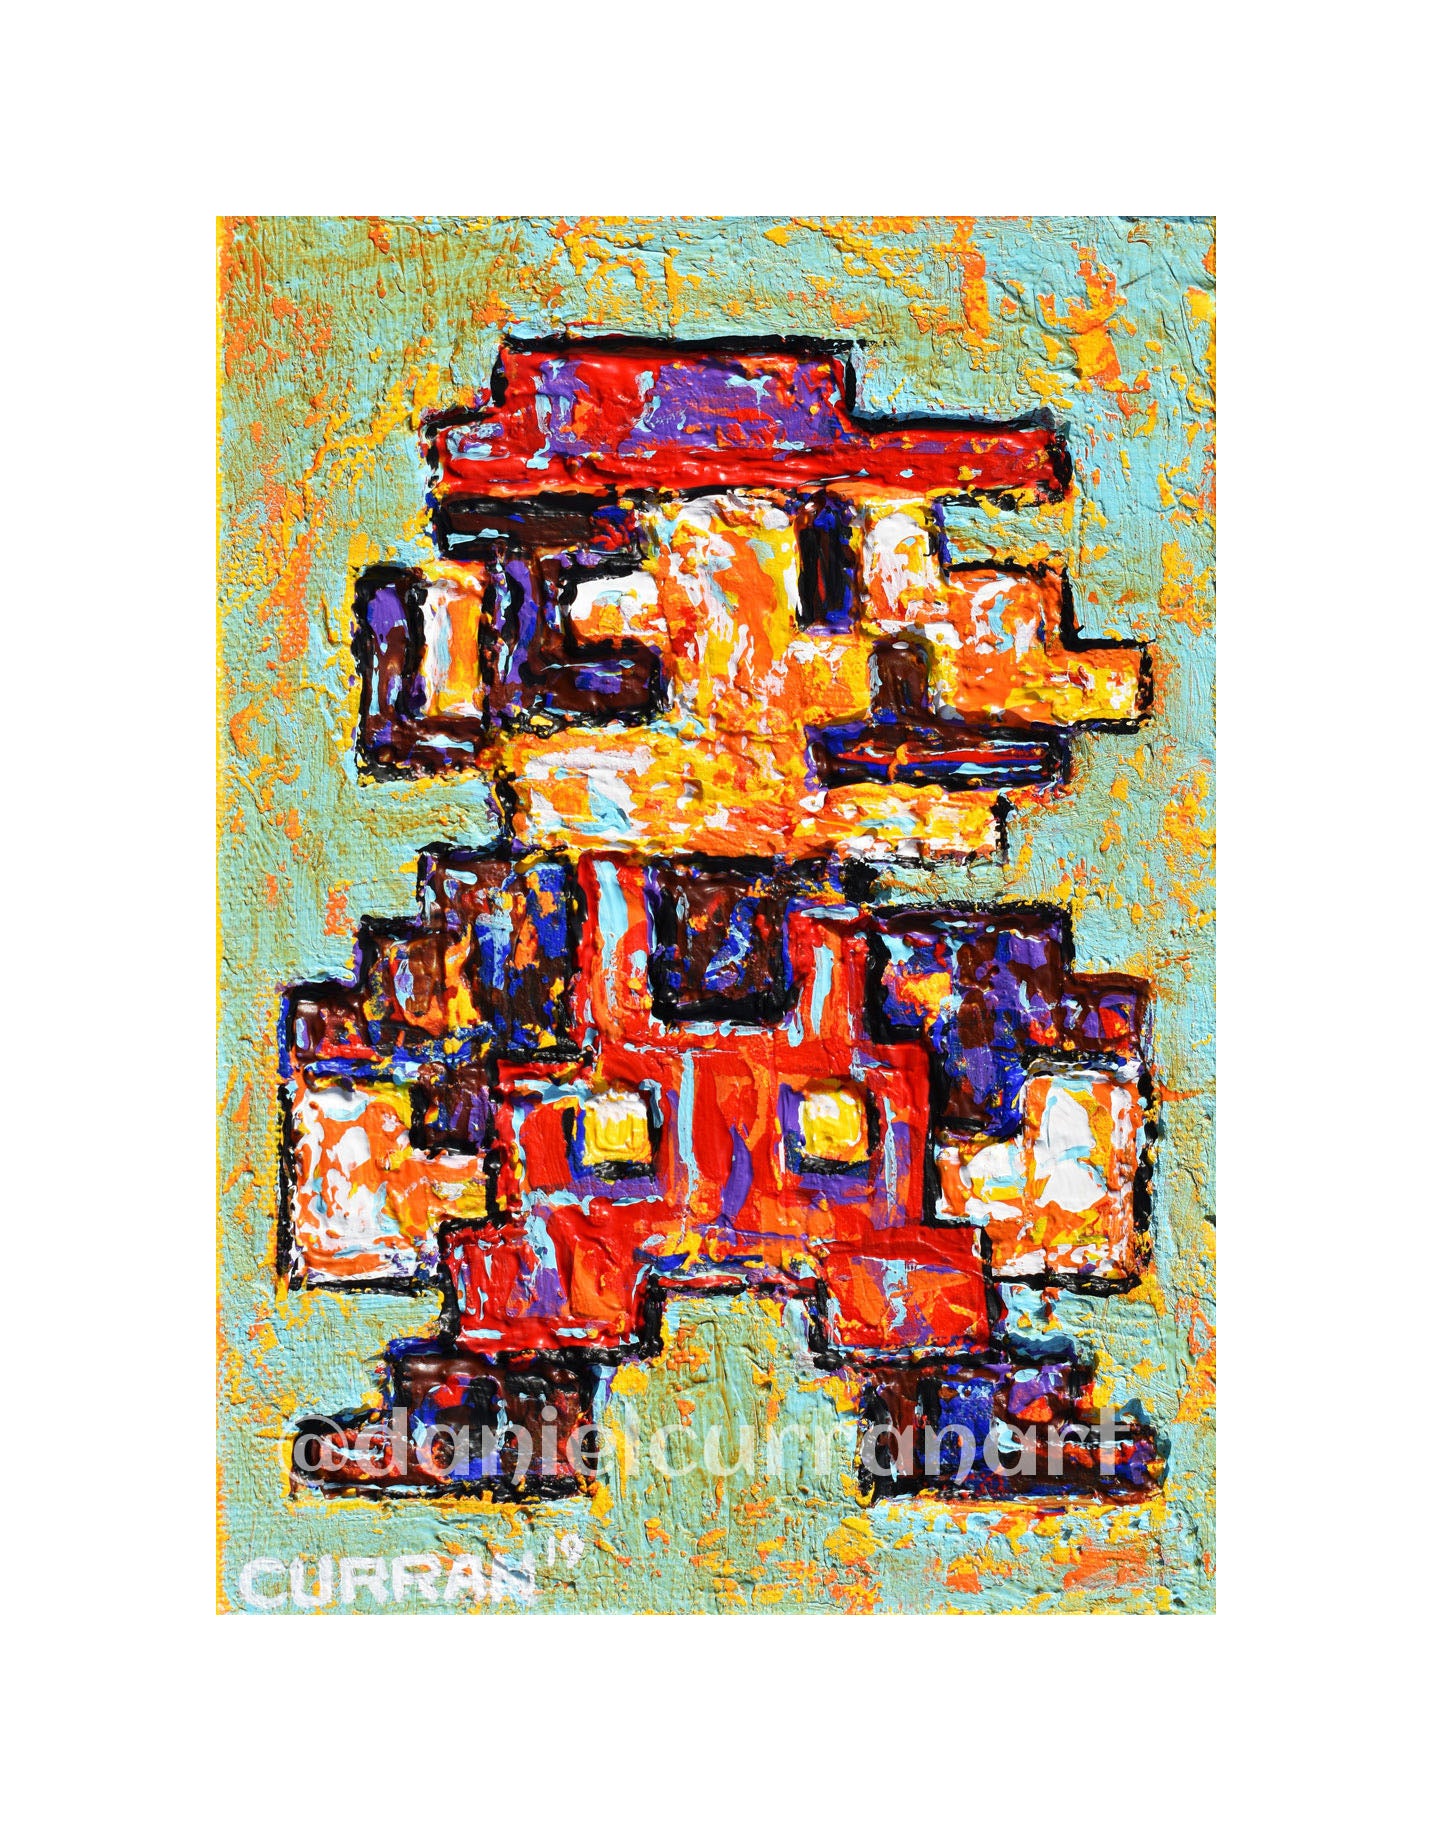 5"x 7" 8 Bit Mario Print (Matted) - Daniel Curran Art